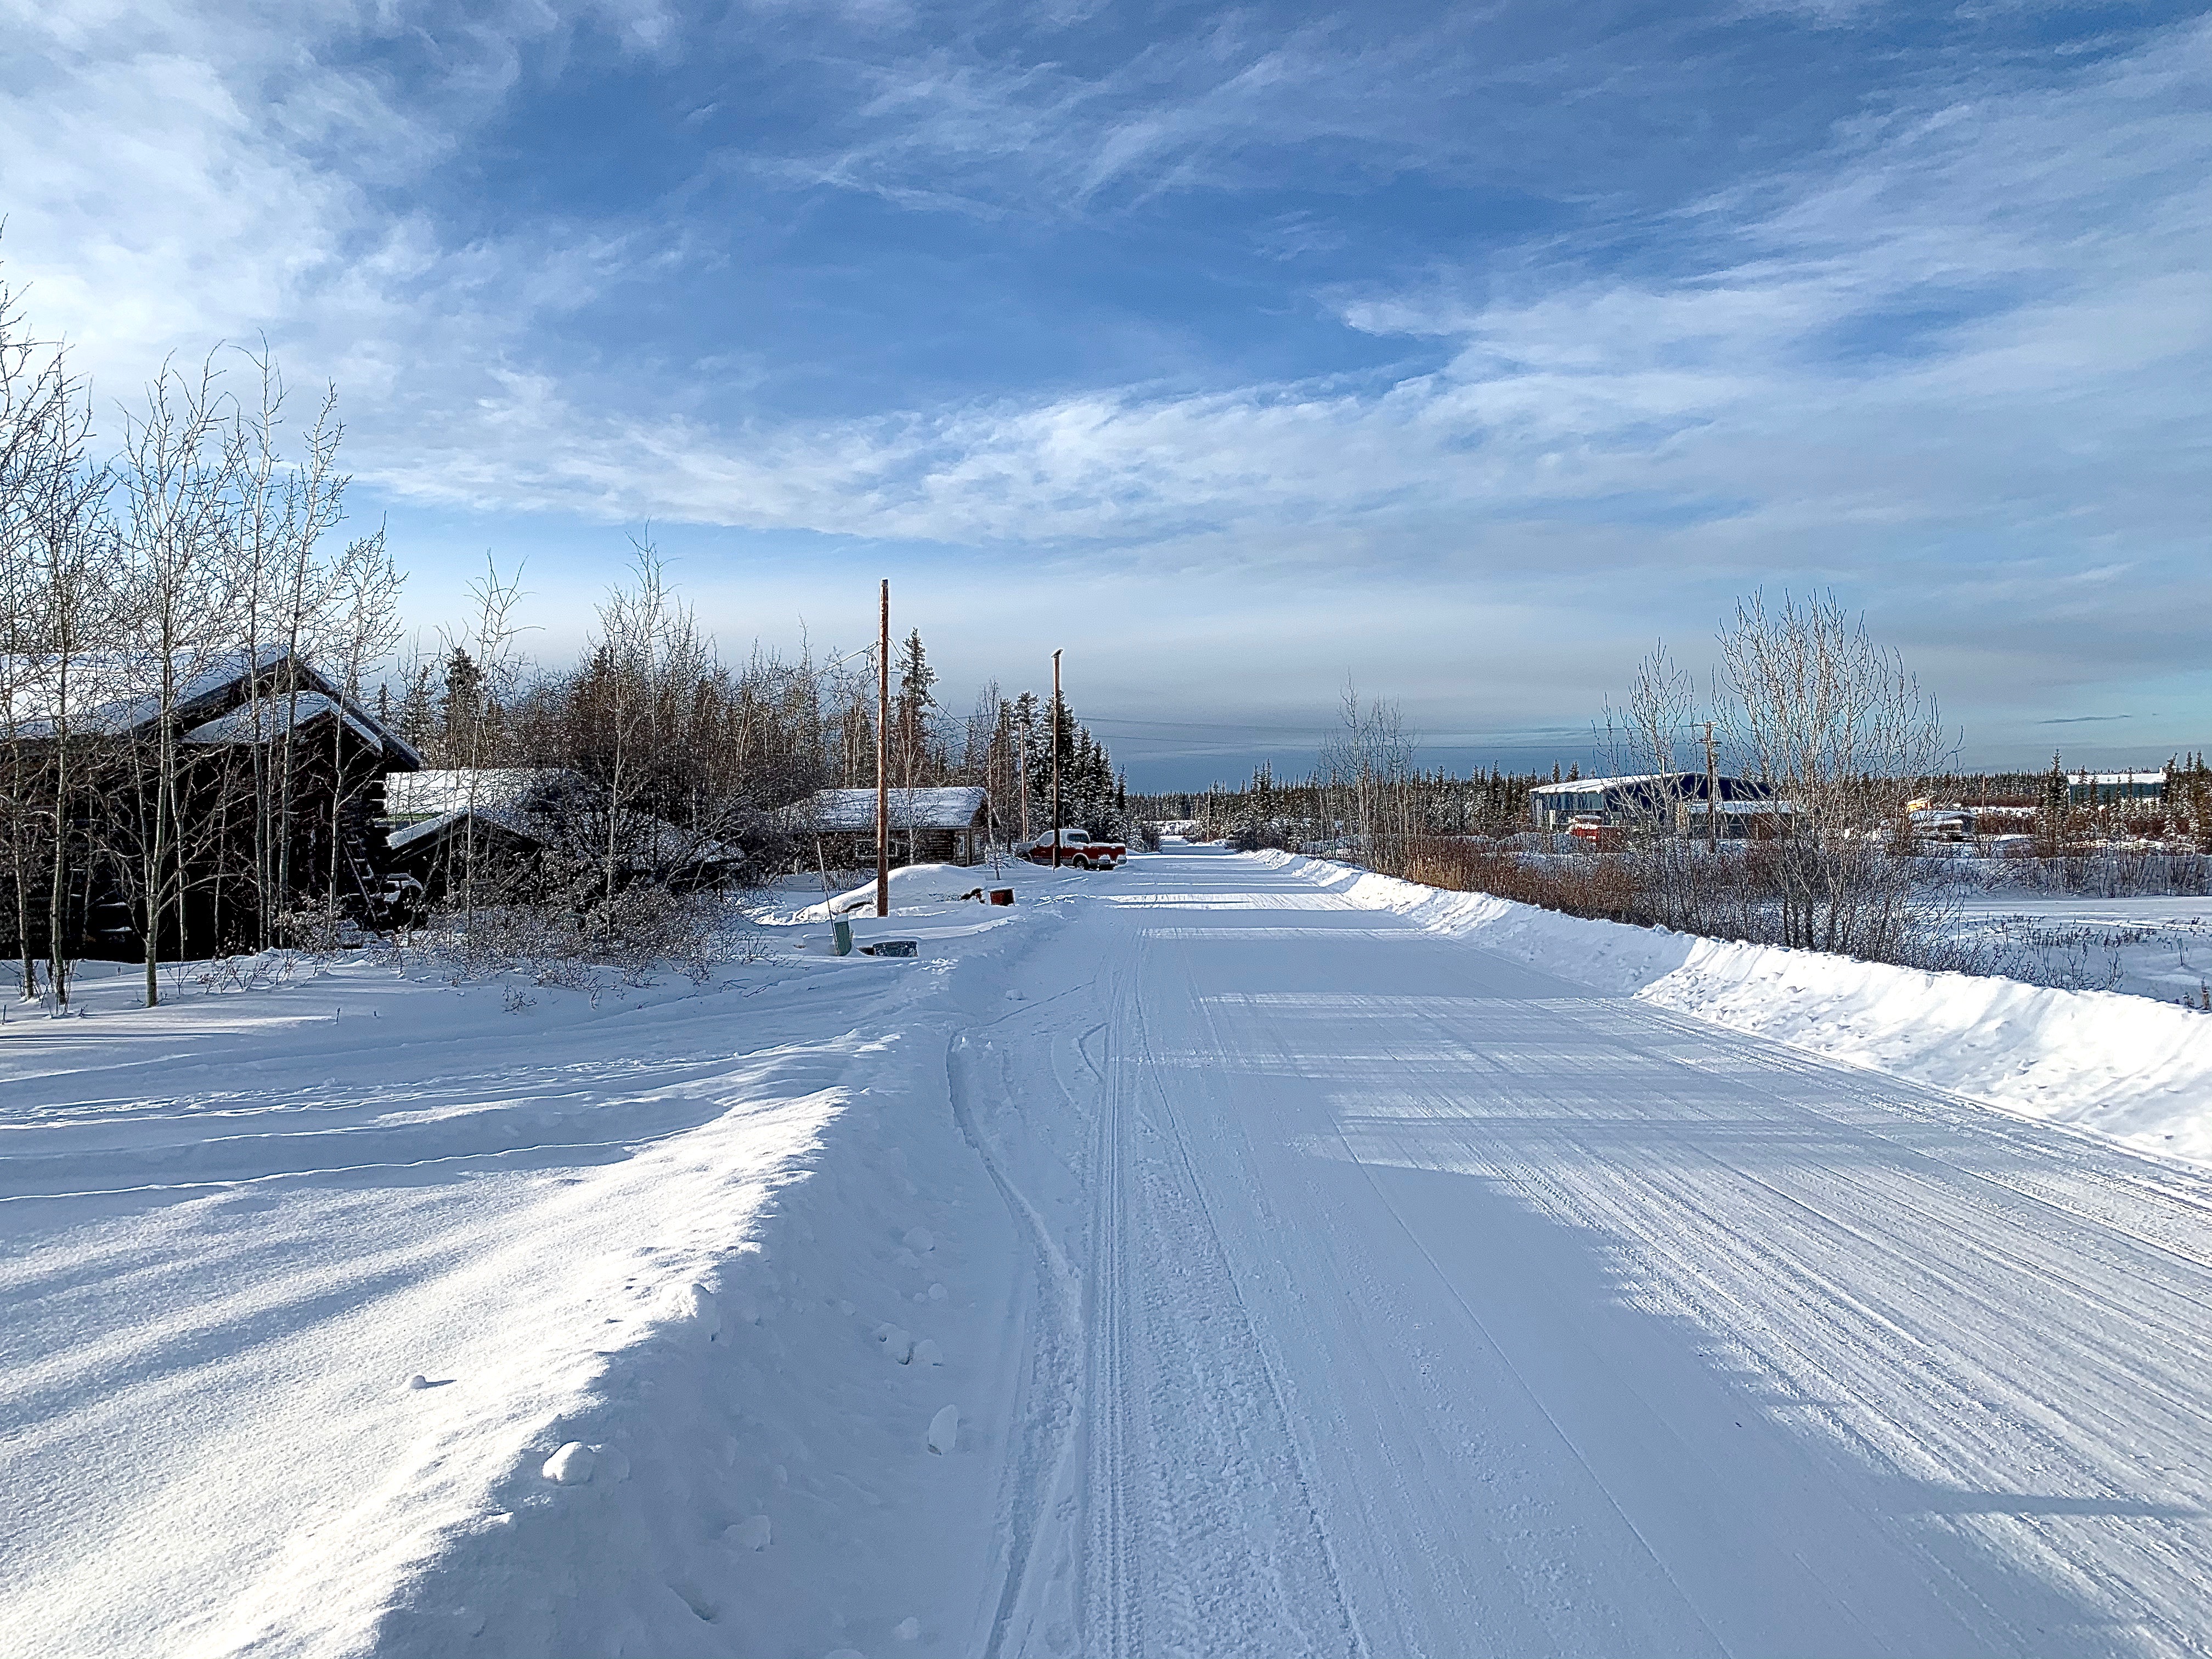 Fort Yukon, Alaska has taken extreme measures to keep COVID-19 at bay (Elliott Hinz)